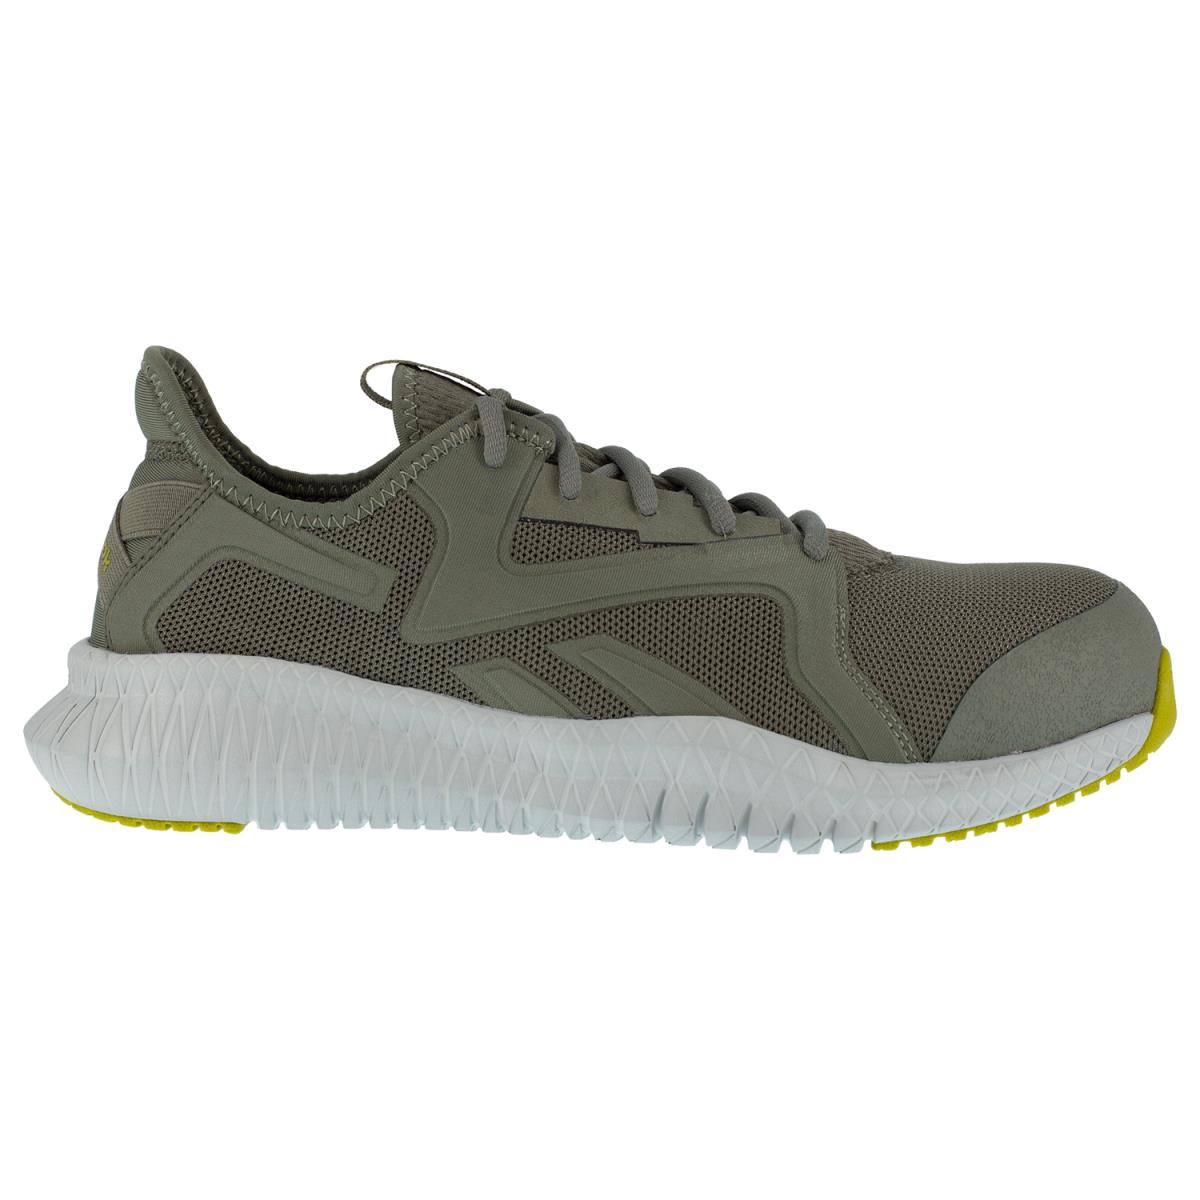 Reebok Mens Lime/grey Textile Work Shoes Flexagon Athletic CT EH M